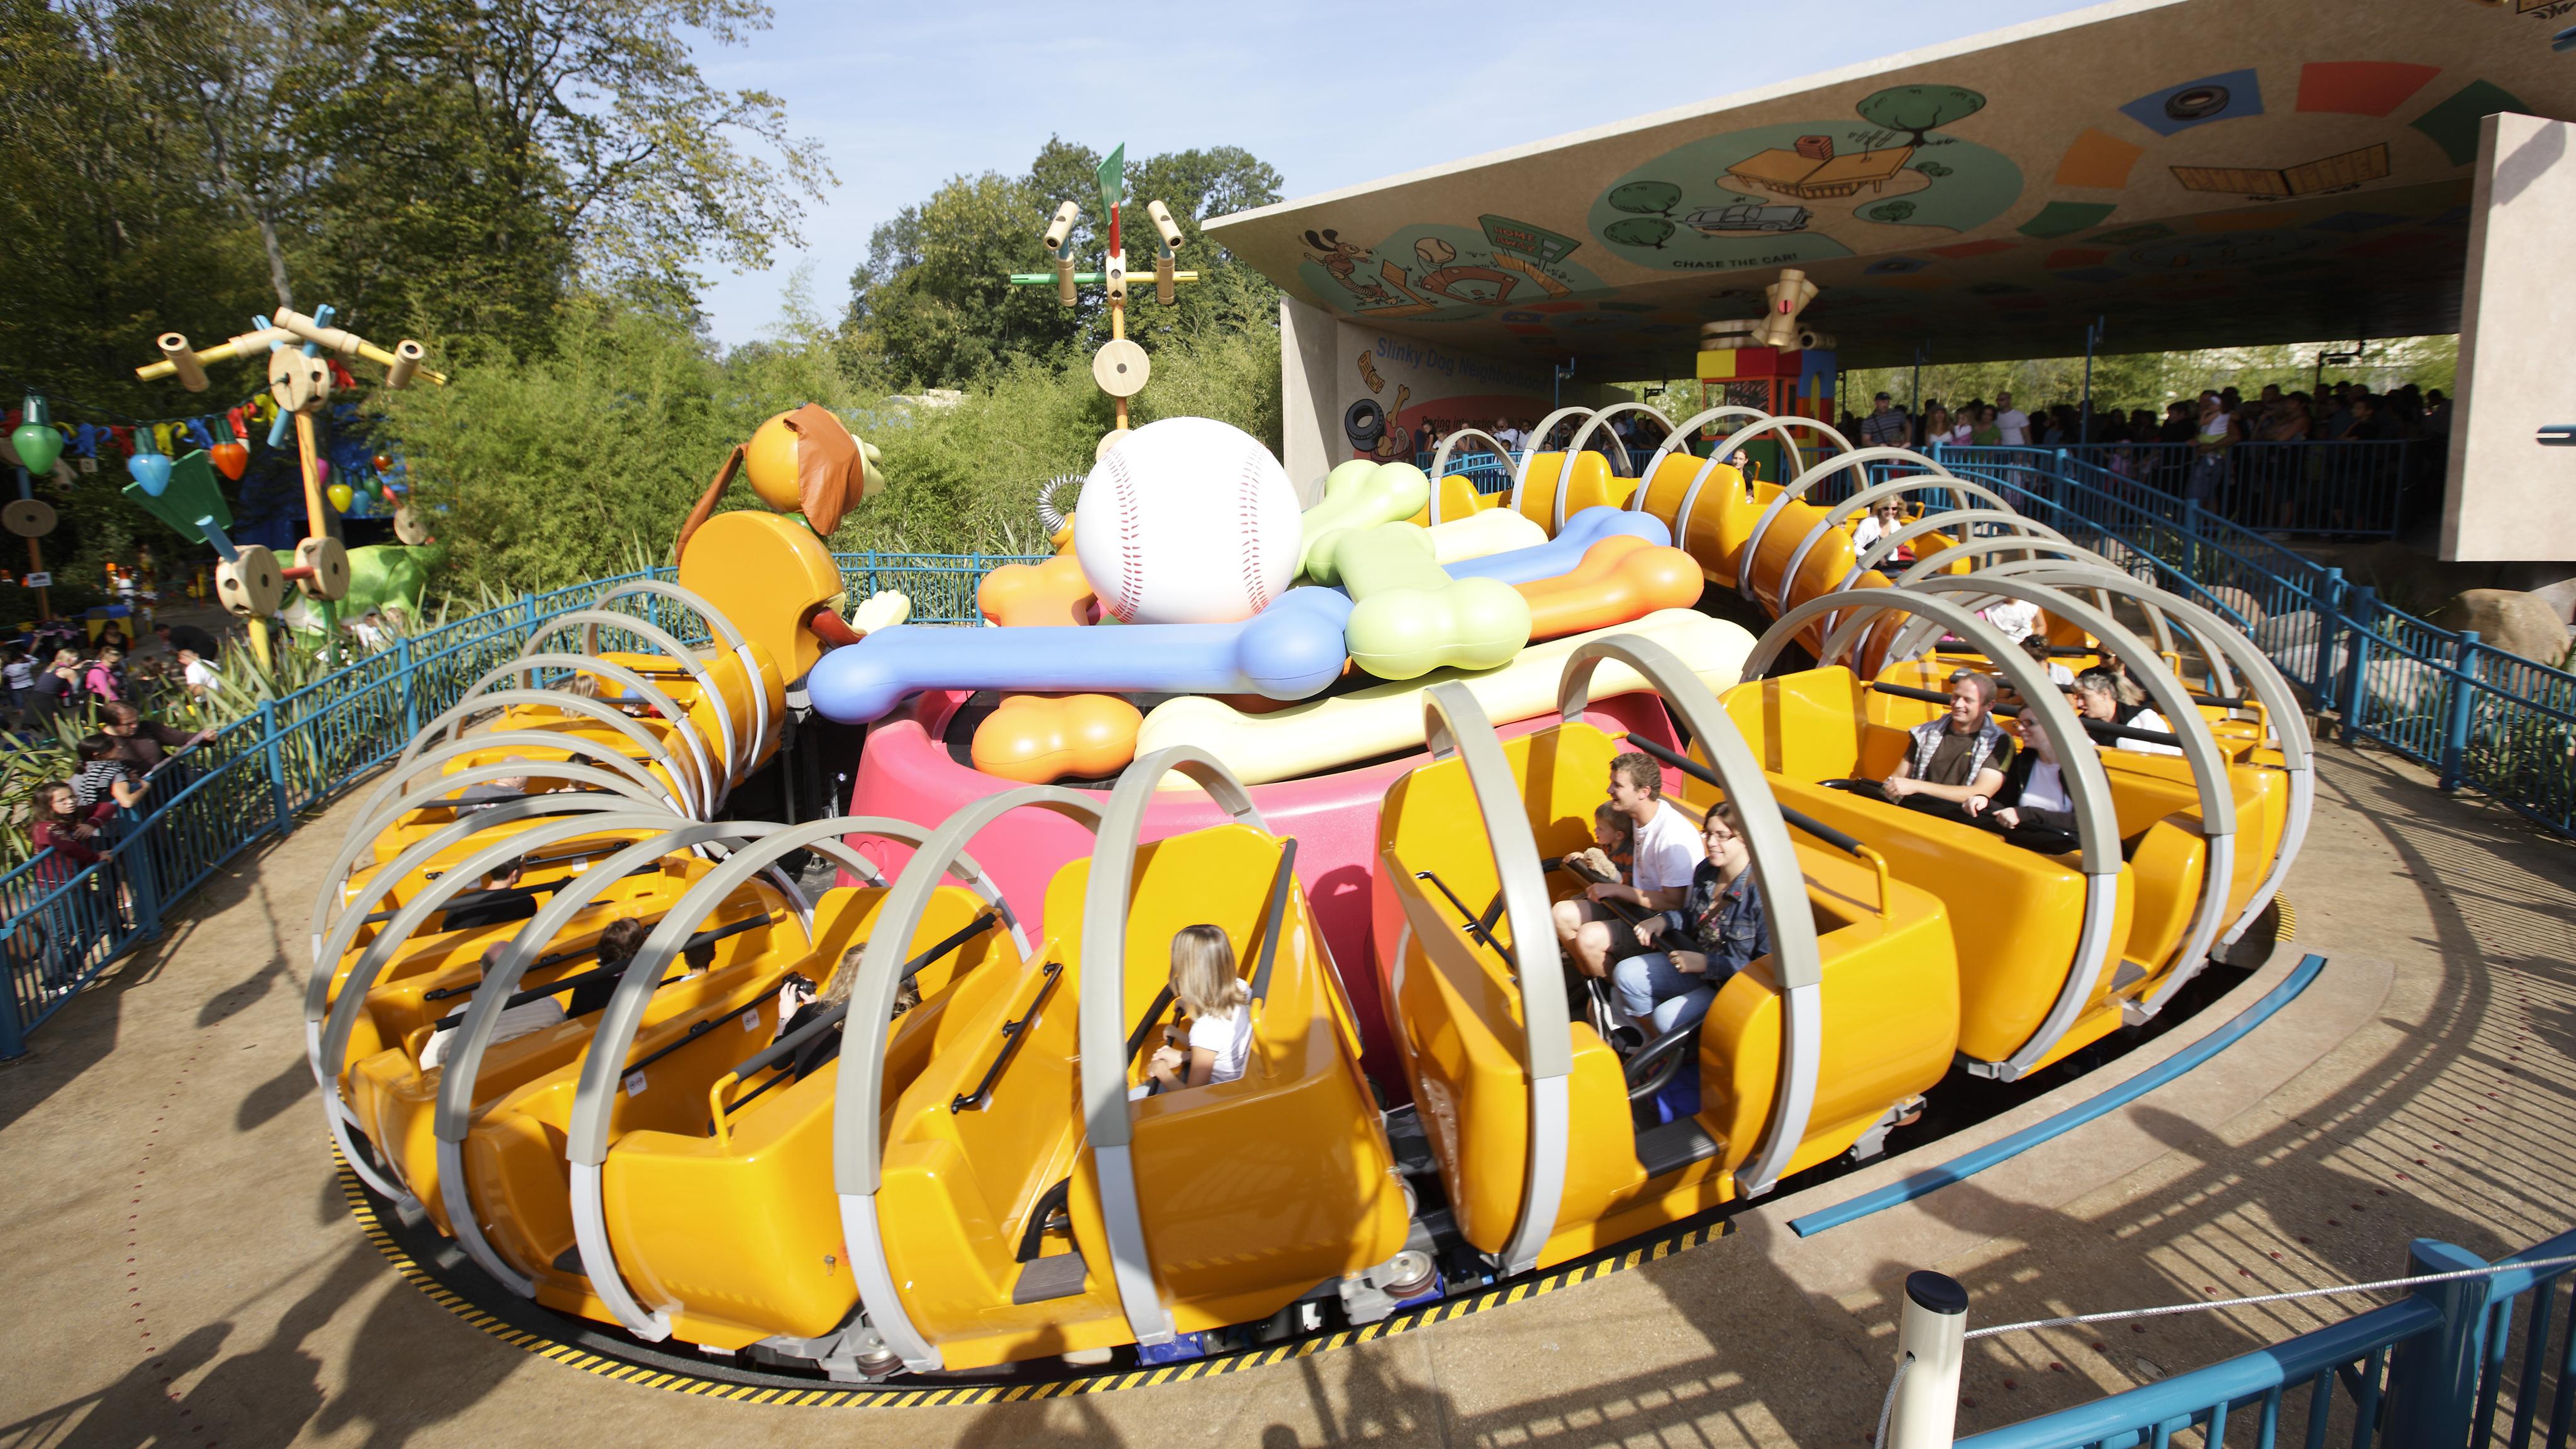 Slinky Dog Zigzag Spin On Ride / Off Ride at Disneyland Paris (Feb 2022)  [4K] 